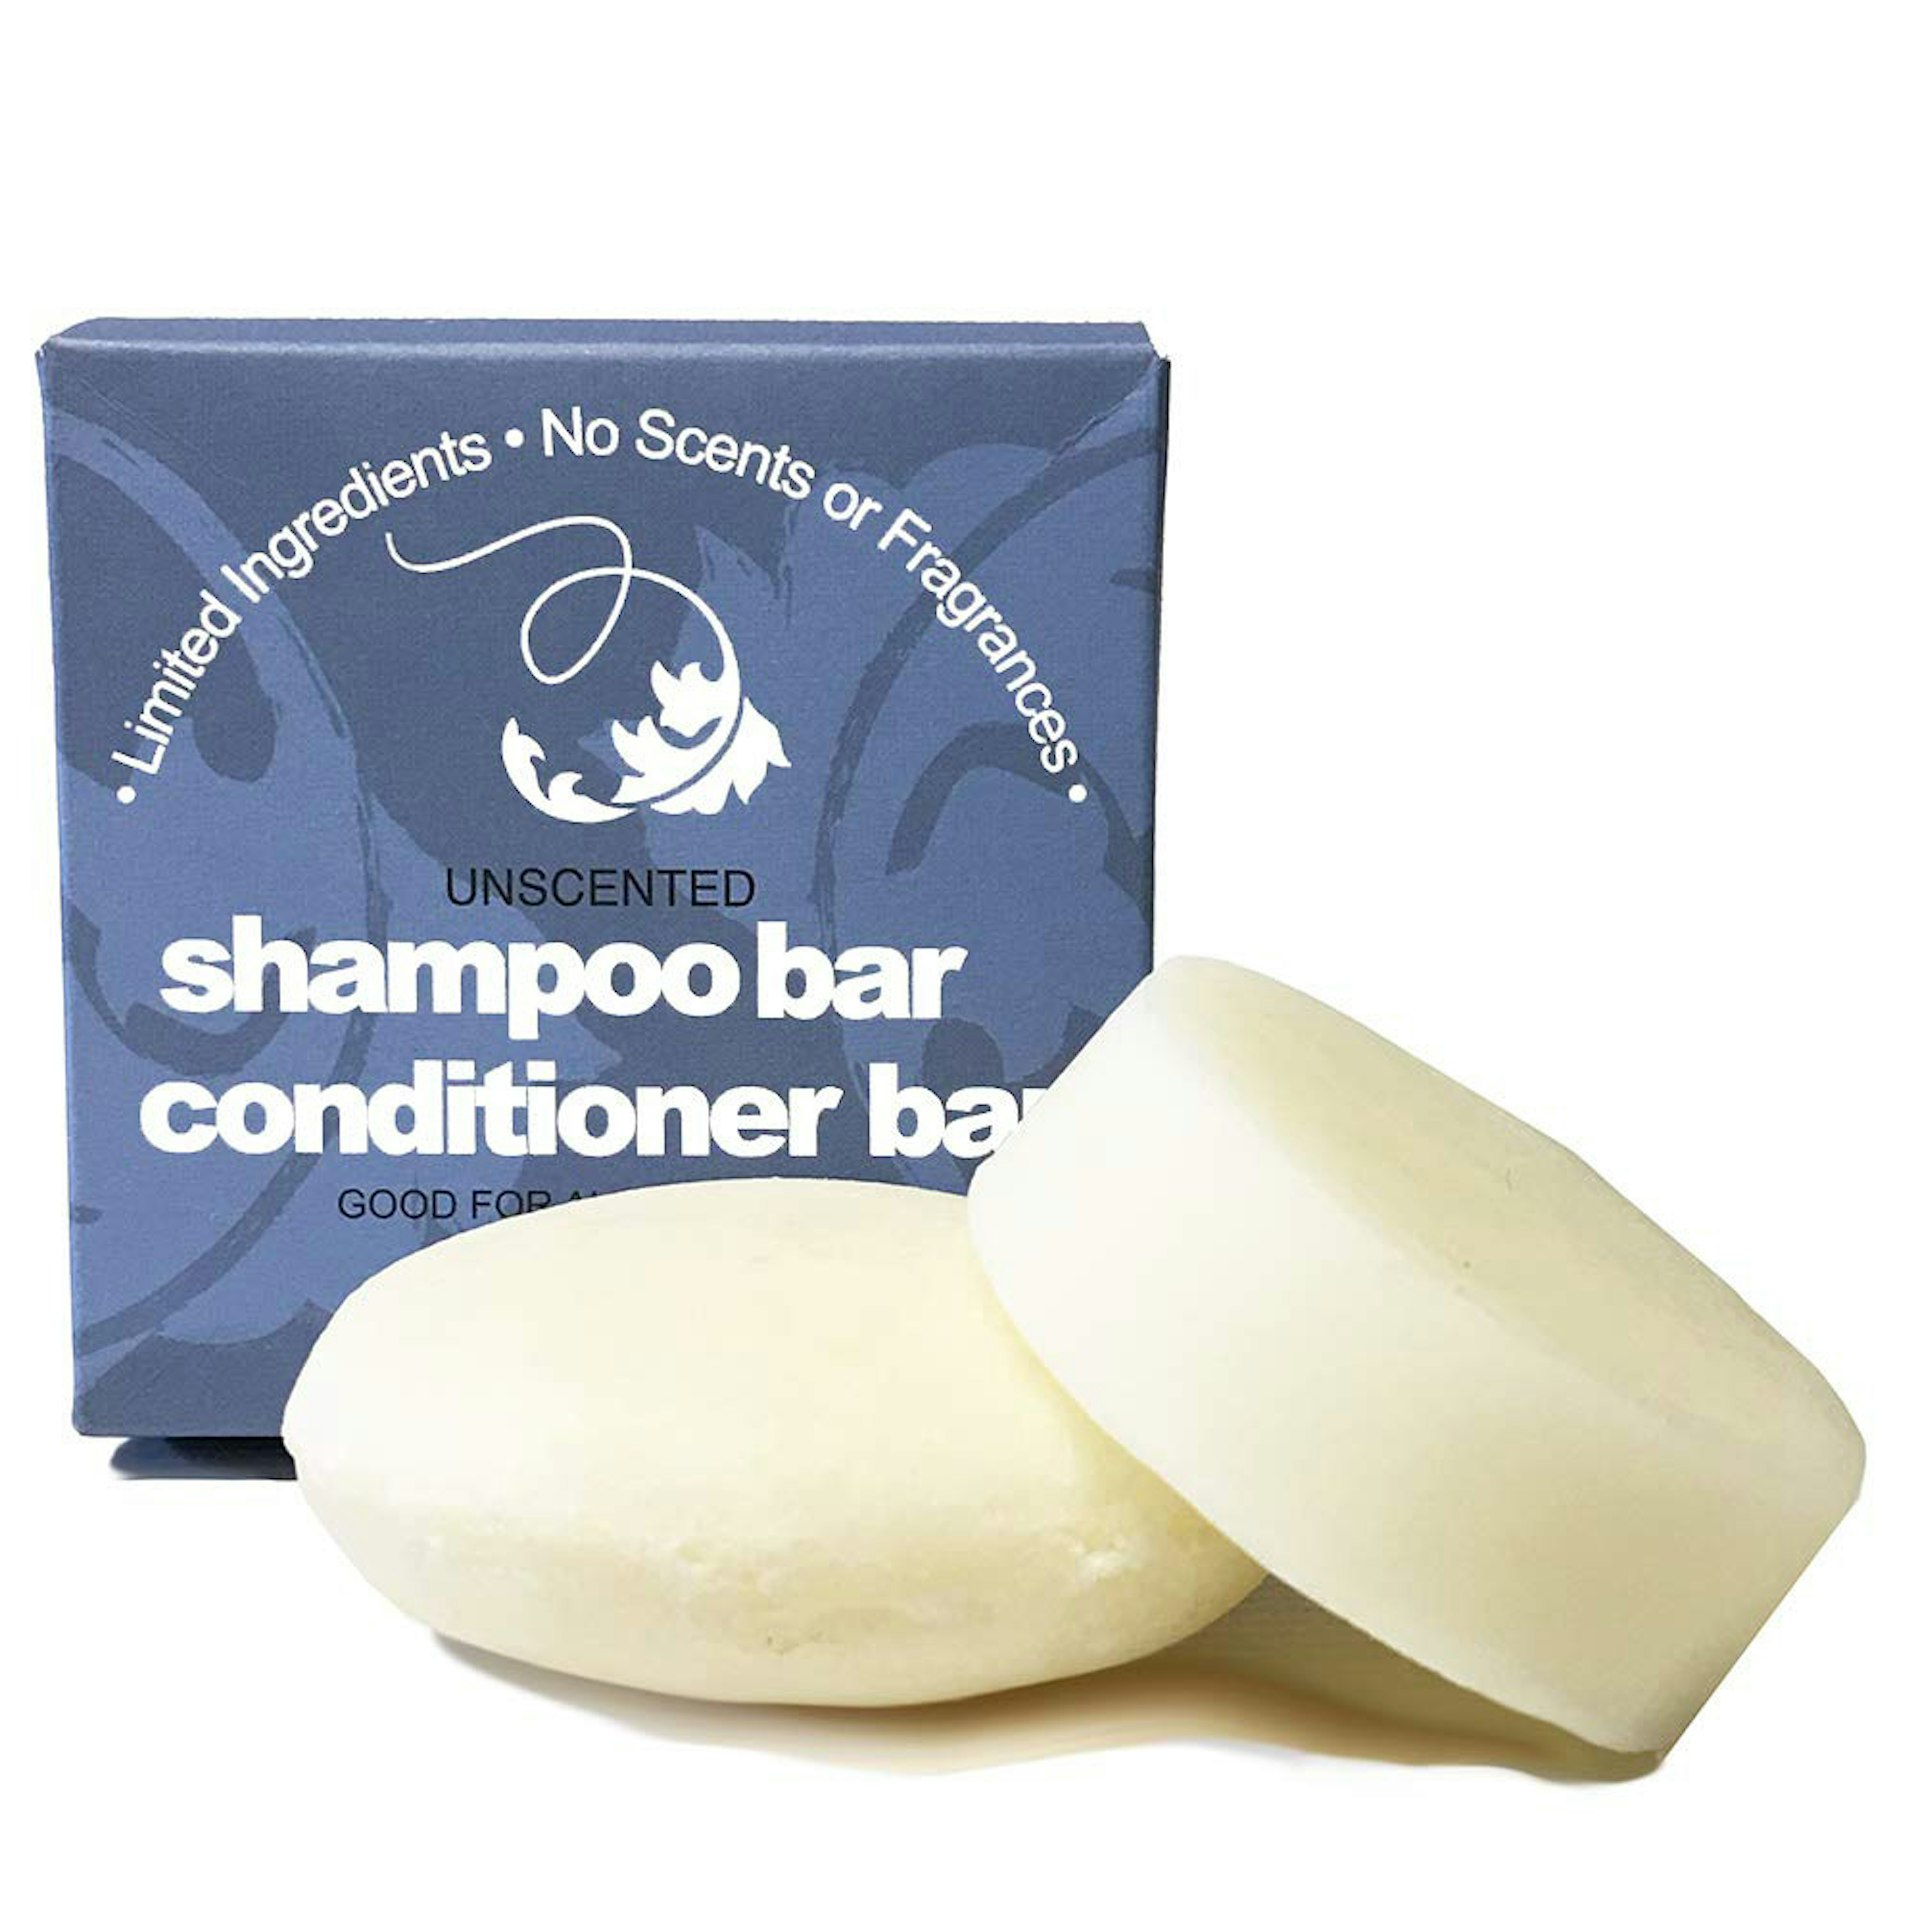 SpiraLeaf's shampoo and conditioner bars